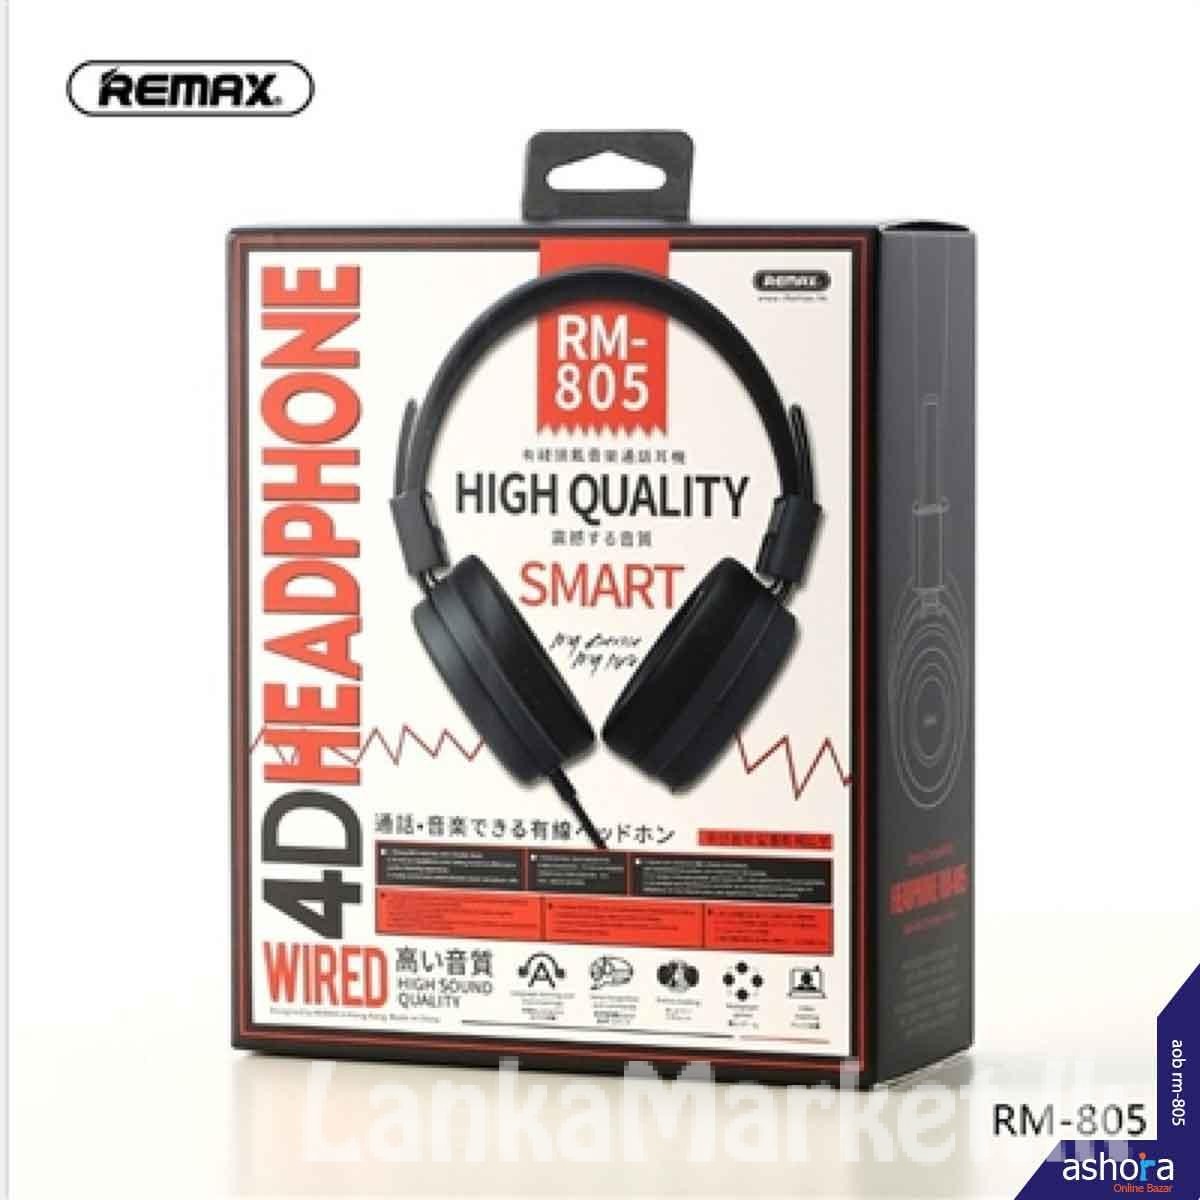 Headset / Headphone / Wired Headset Music over-ear Headphone / Remax Rm-805 Wired Headset Music over-ear Headphone